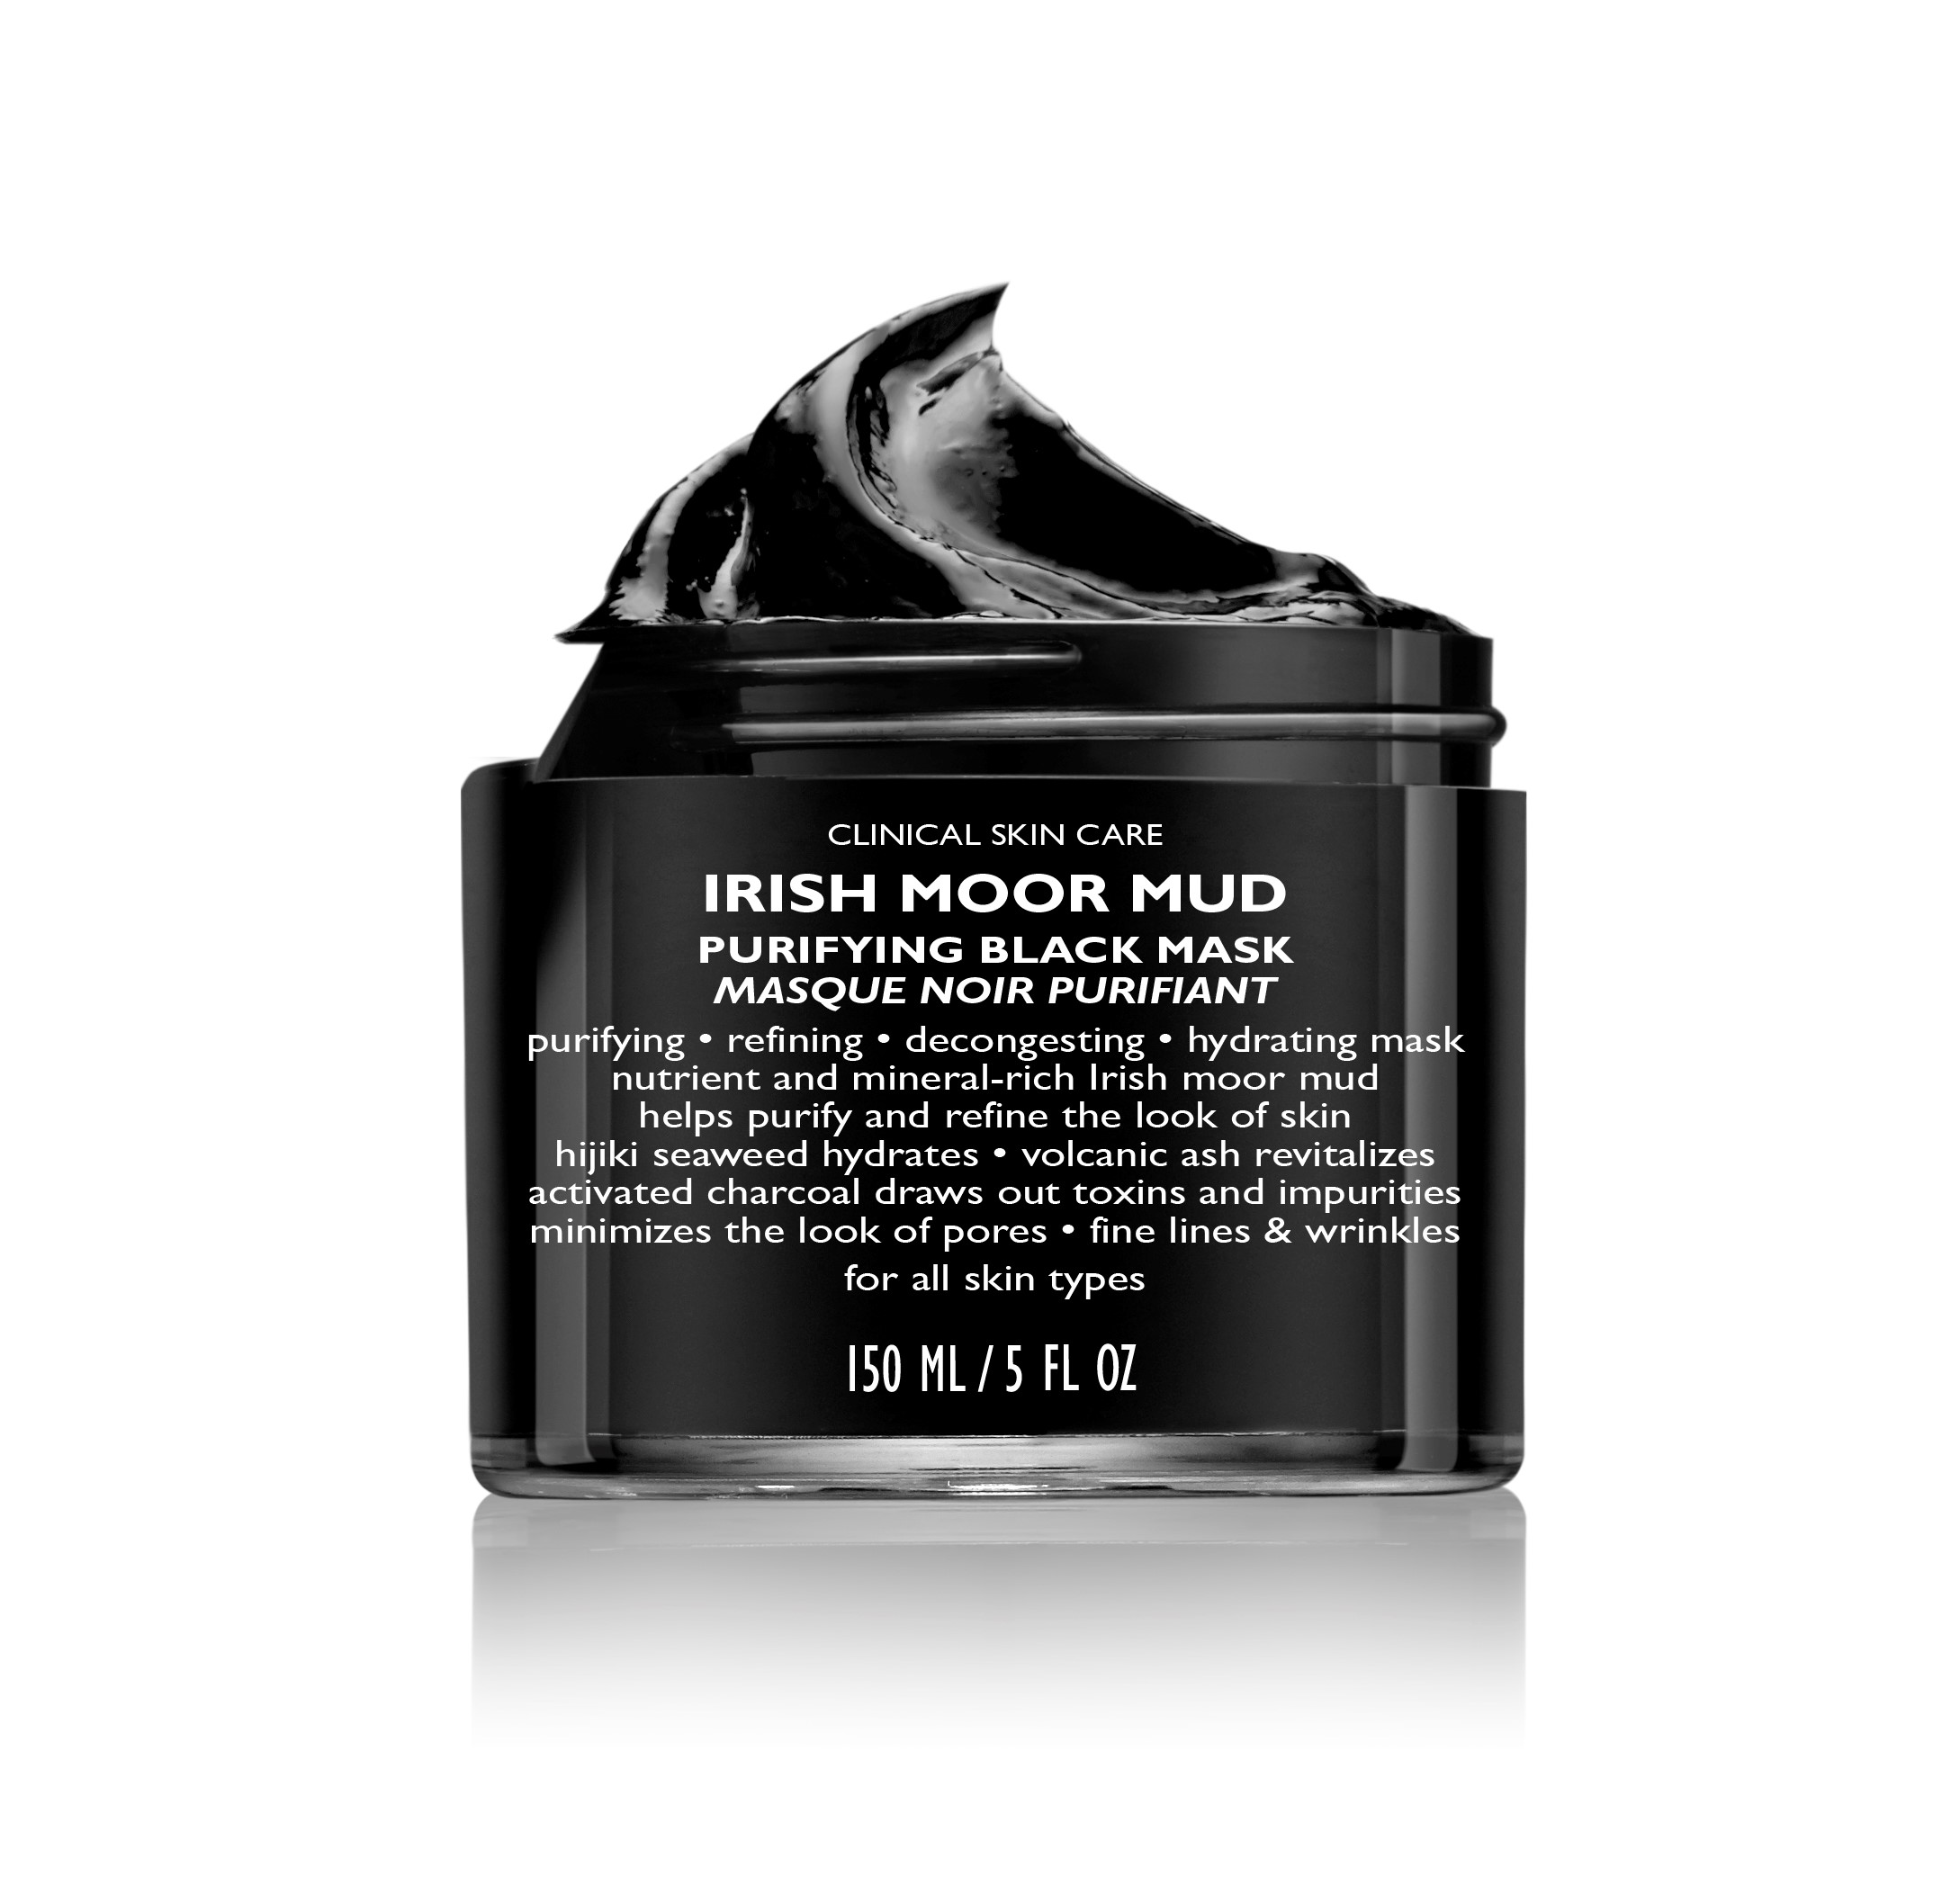 Peter Thomas Roth Irish Moor Mud Purifying Black Mask 150 ml.